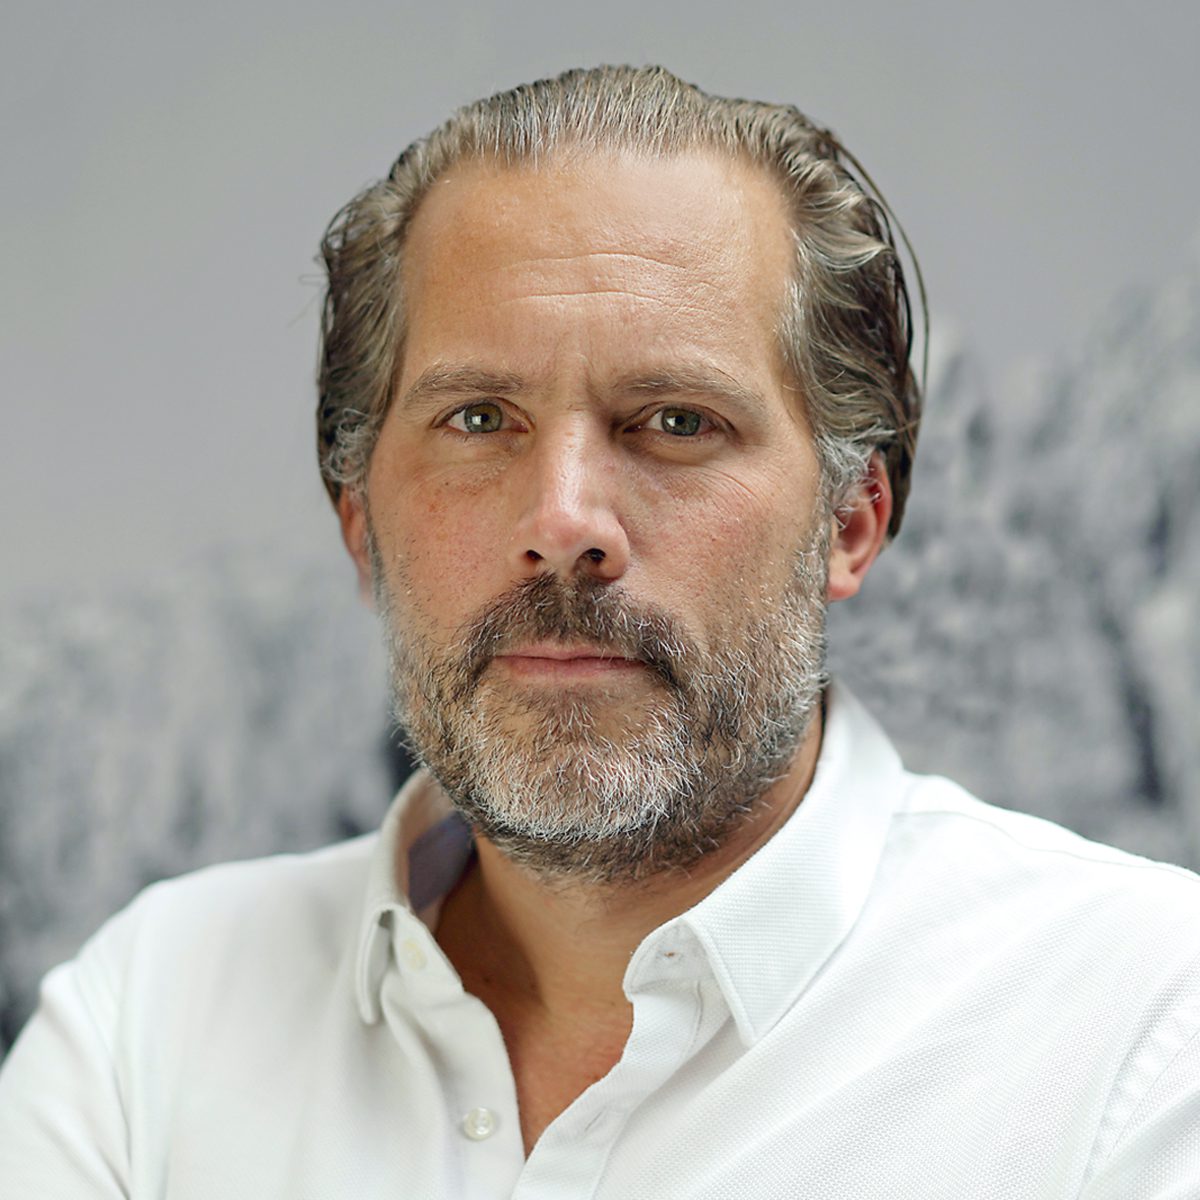 PD Dr. med. Philip Catalá-Lehnen